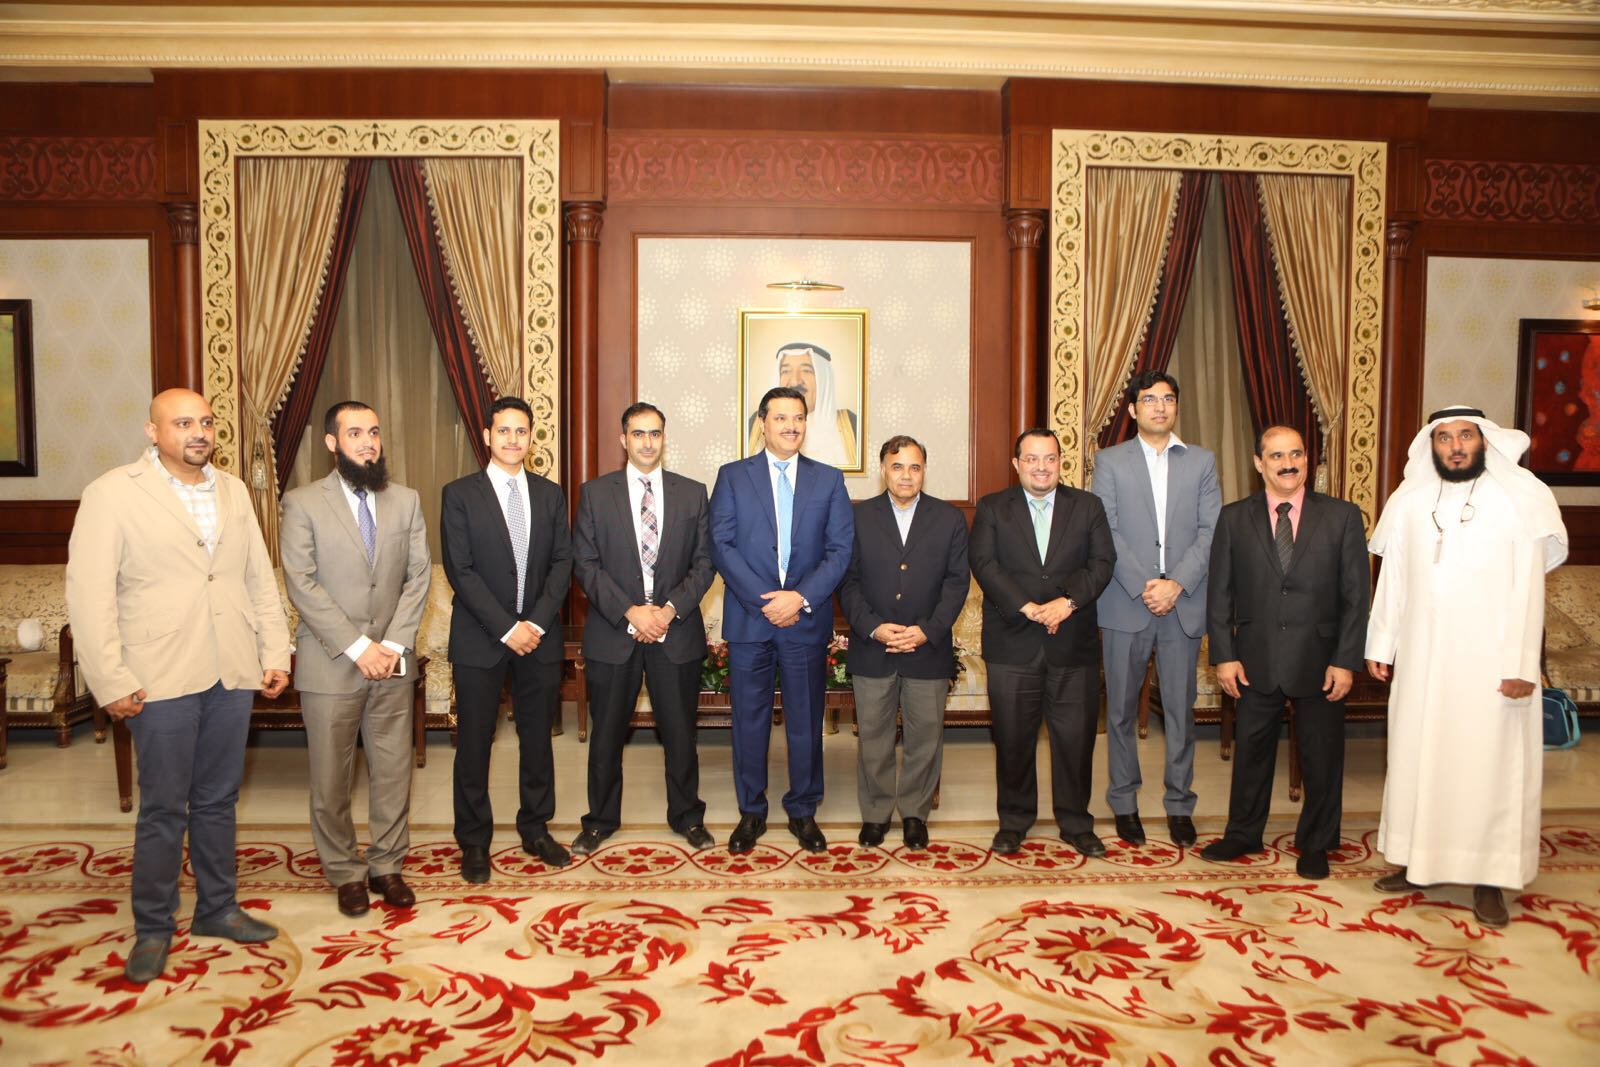 Kuwaiti Health Minister Jamal Al-Harbi with the members of World Health Organization (WHO) Regional Committee for the Eastern Mediterranean